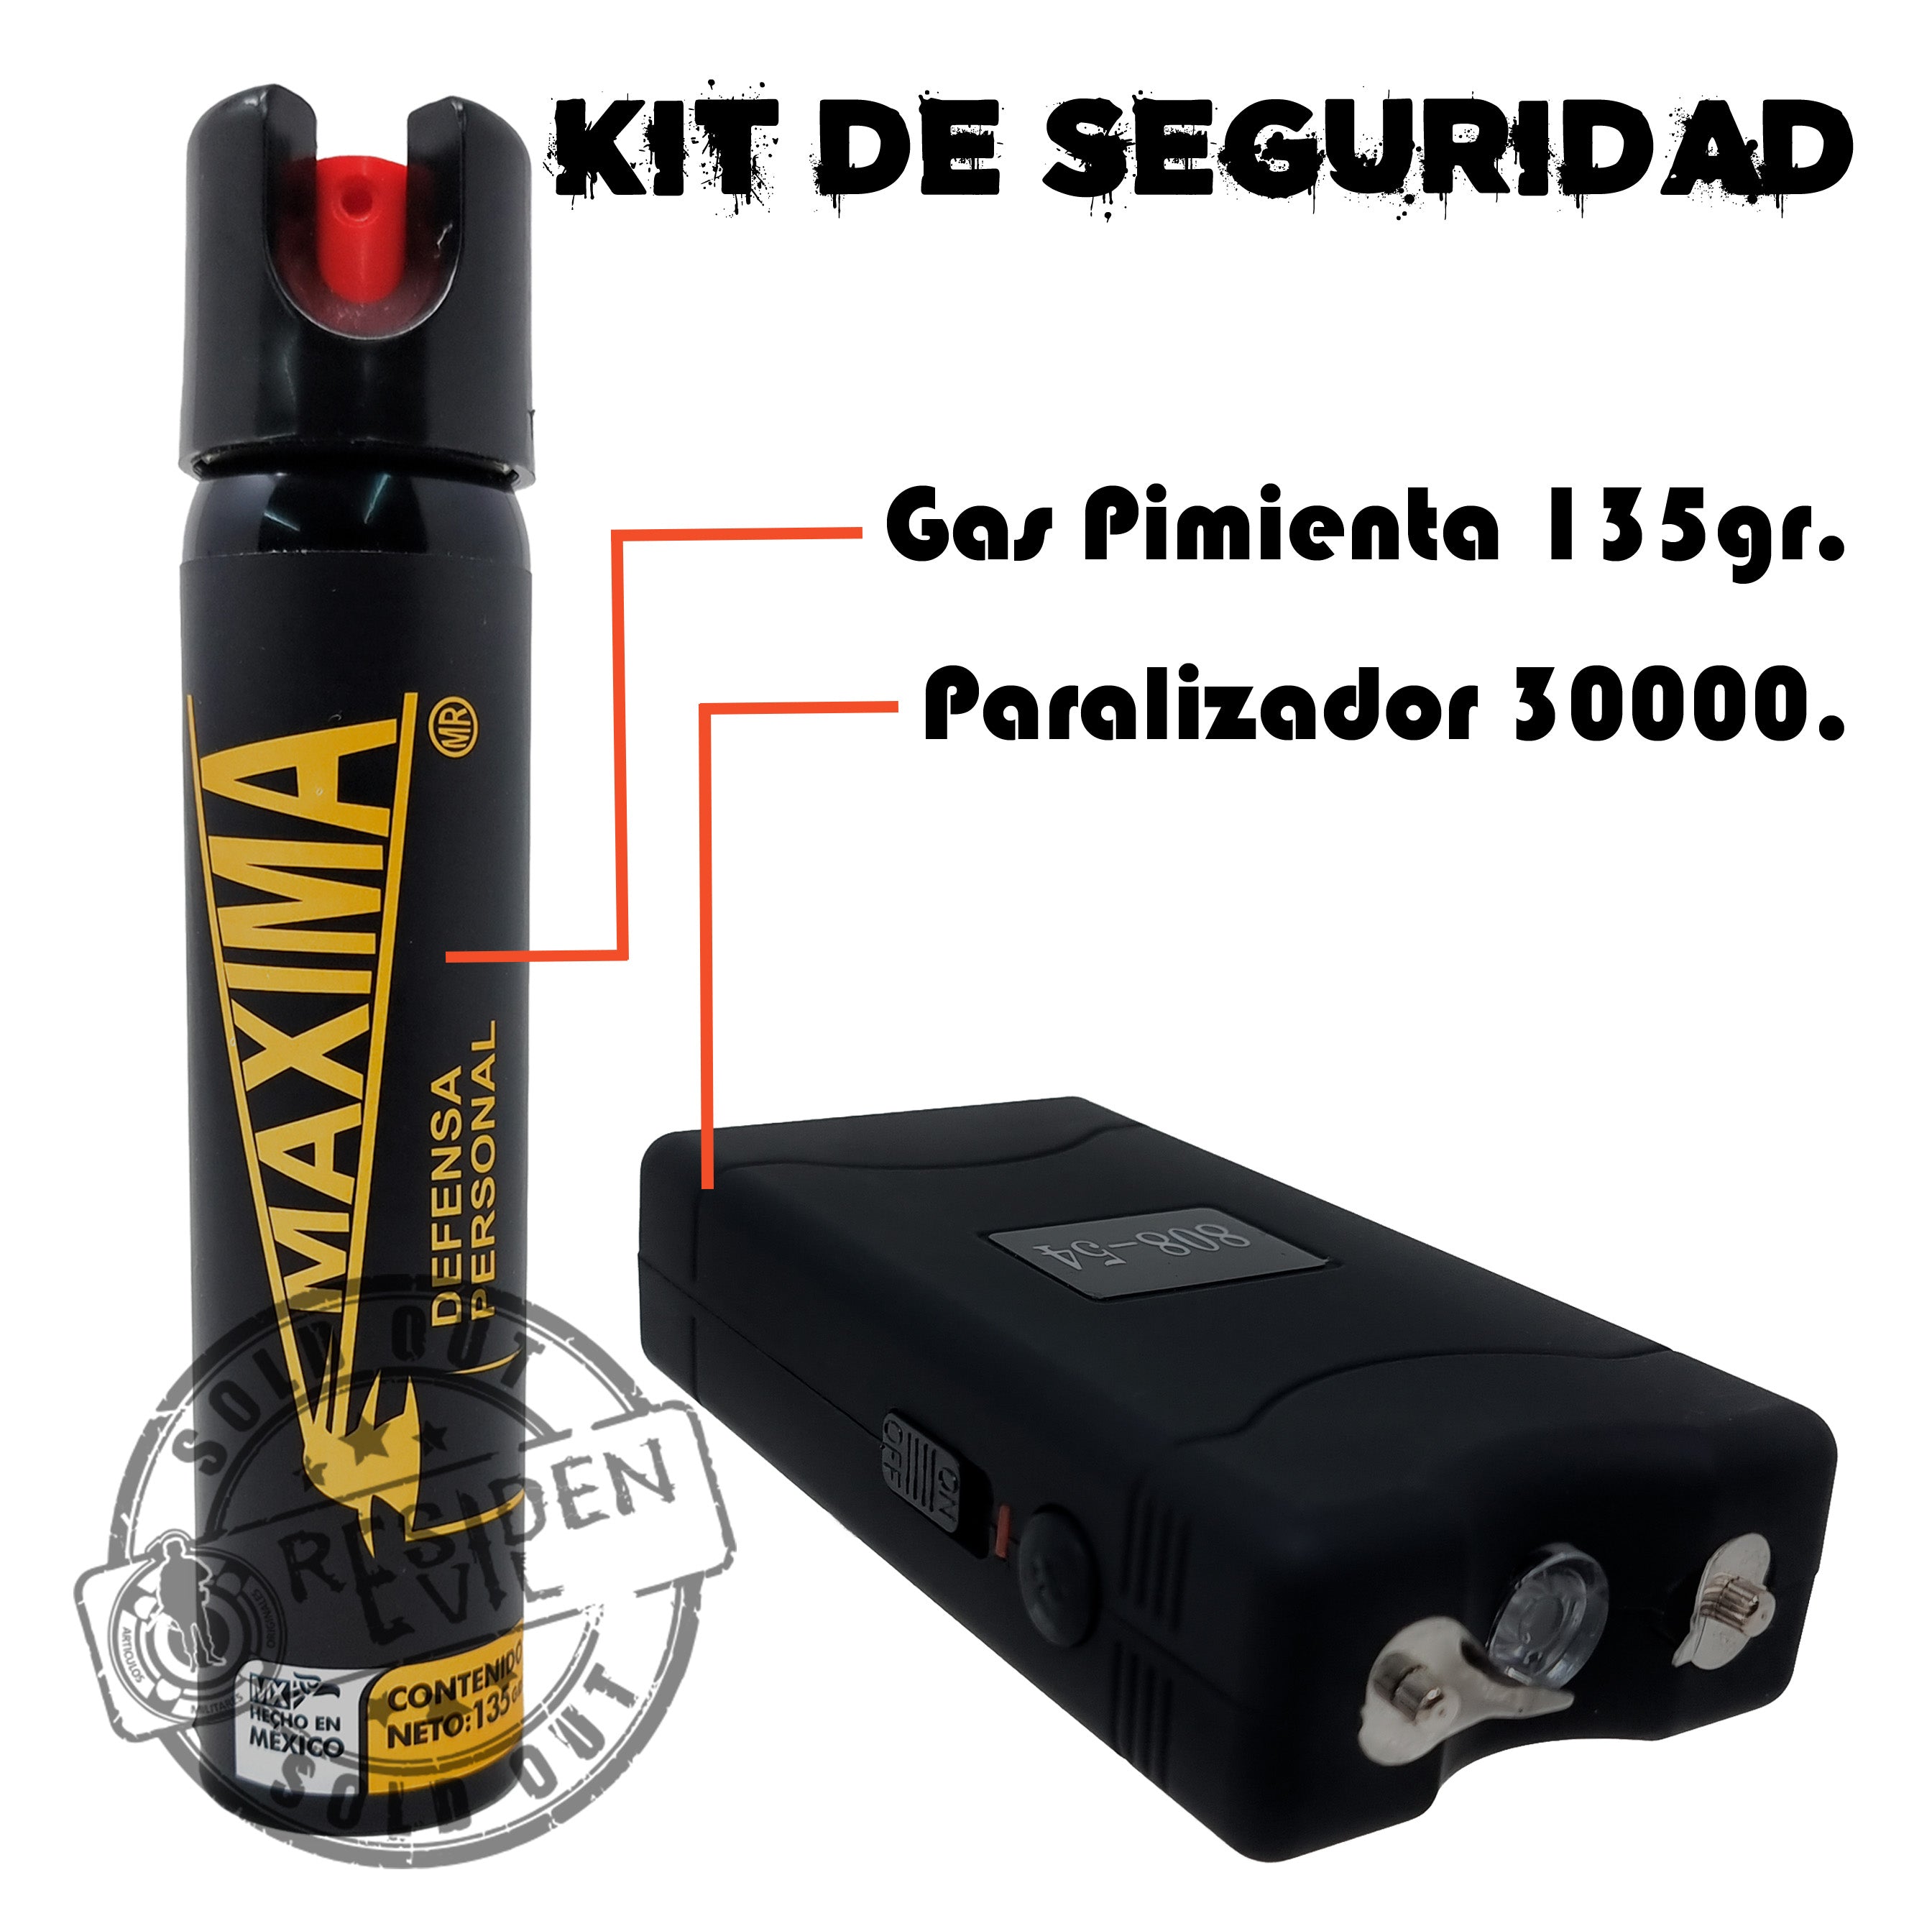 Kit Para Defensa Personal Stun Taser + Gas Pimienta